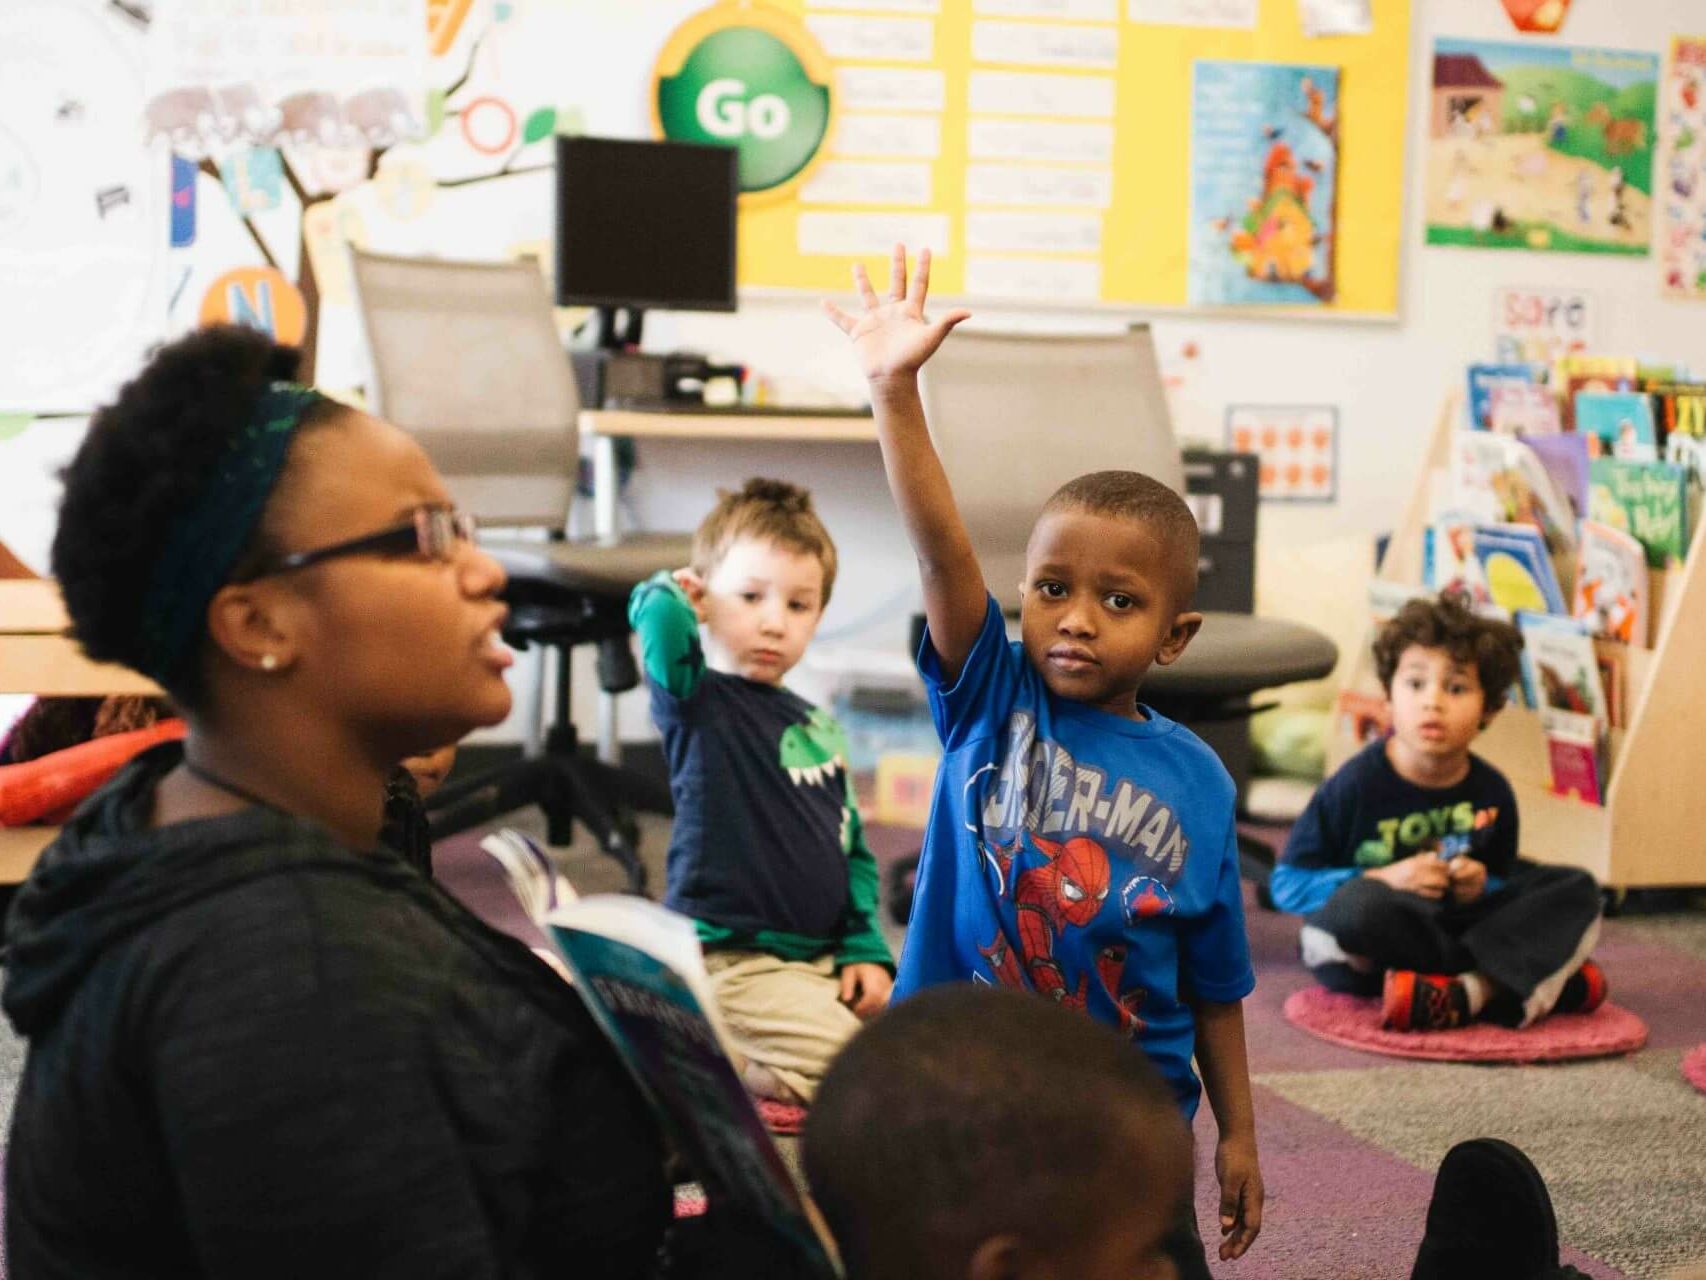 boy raising his hand to answer a question in preschool class